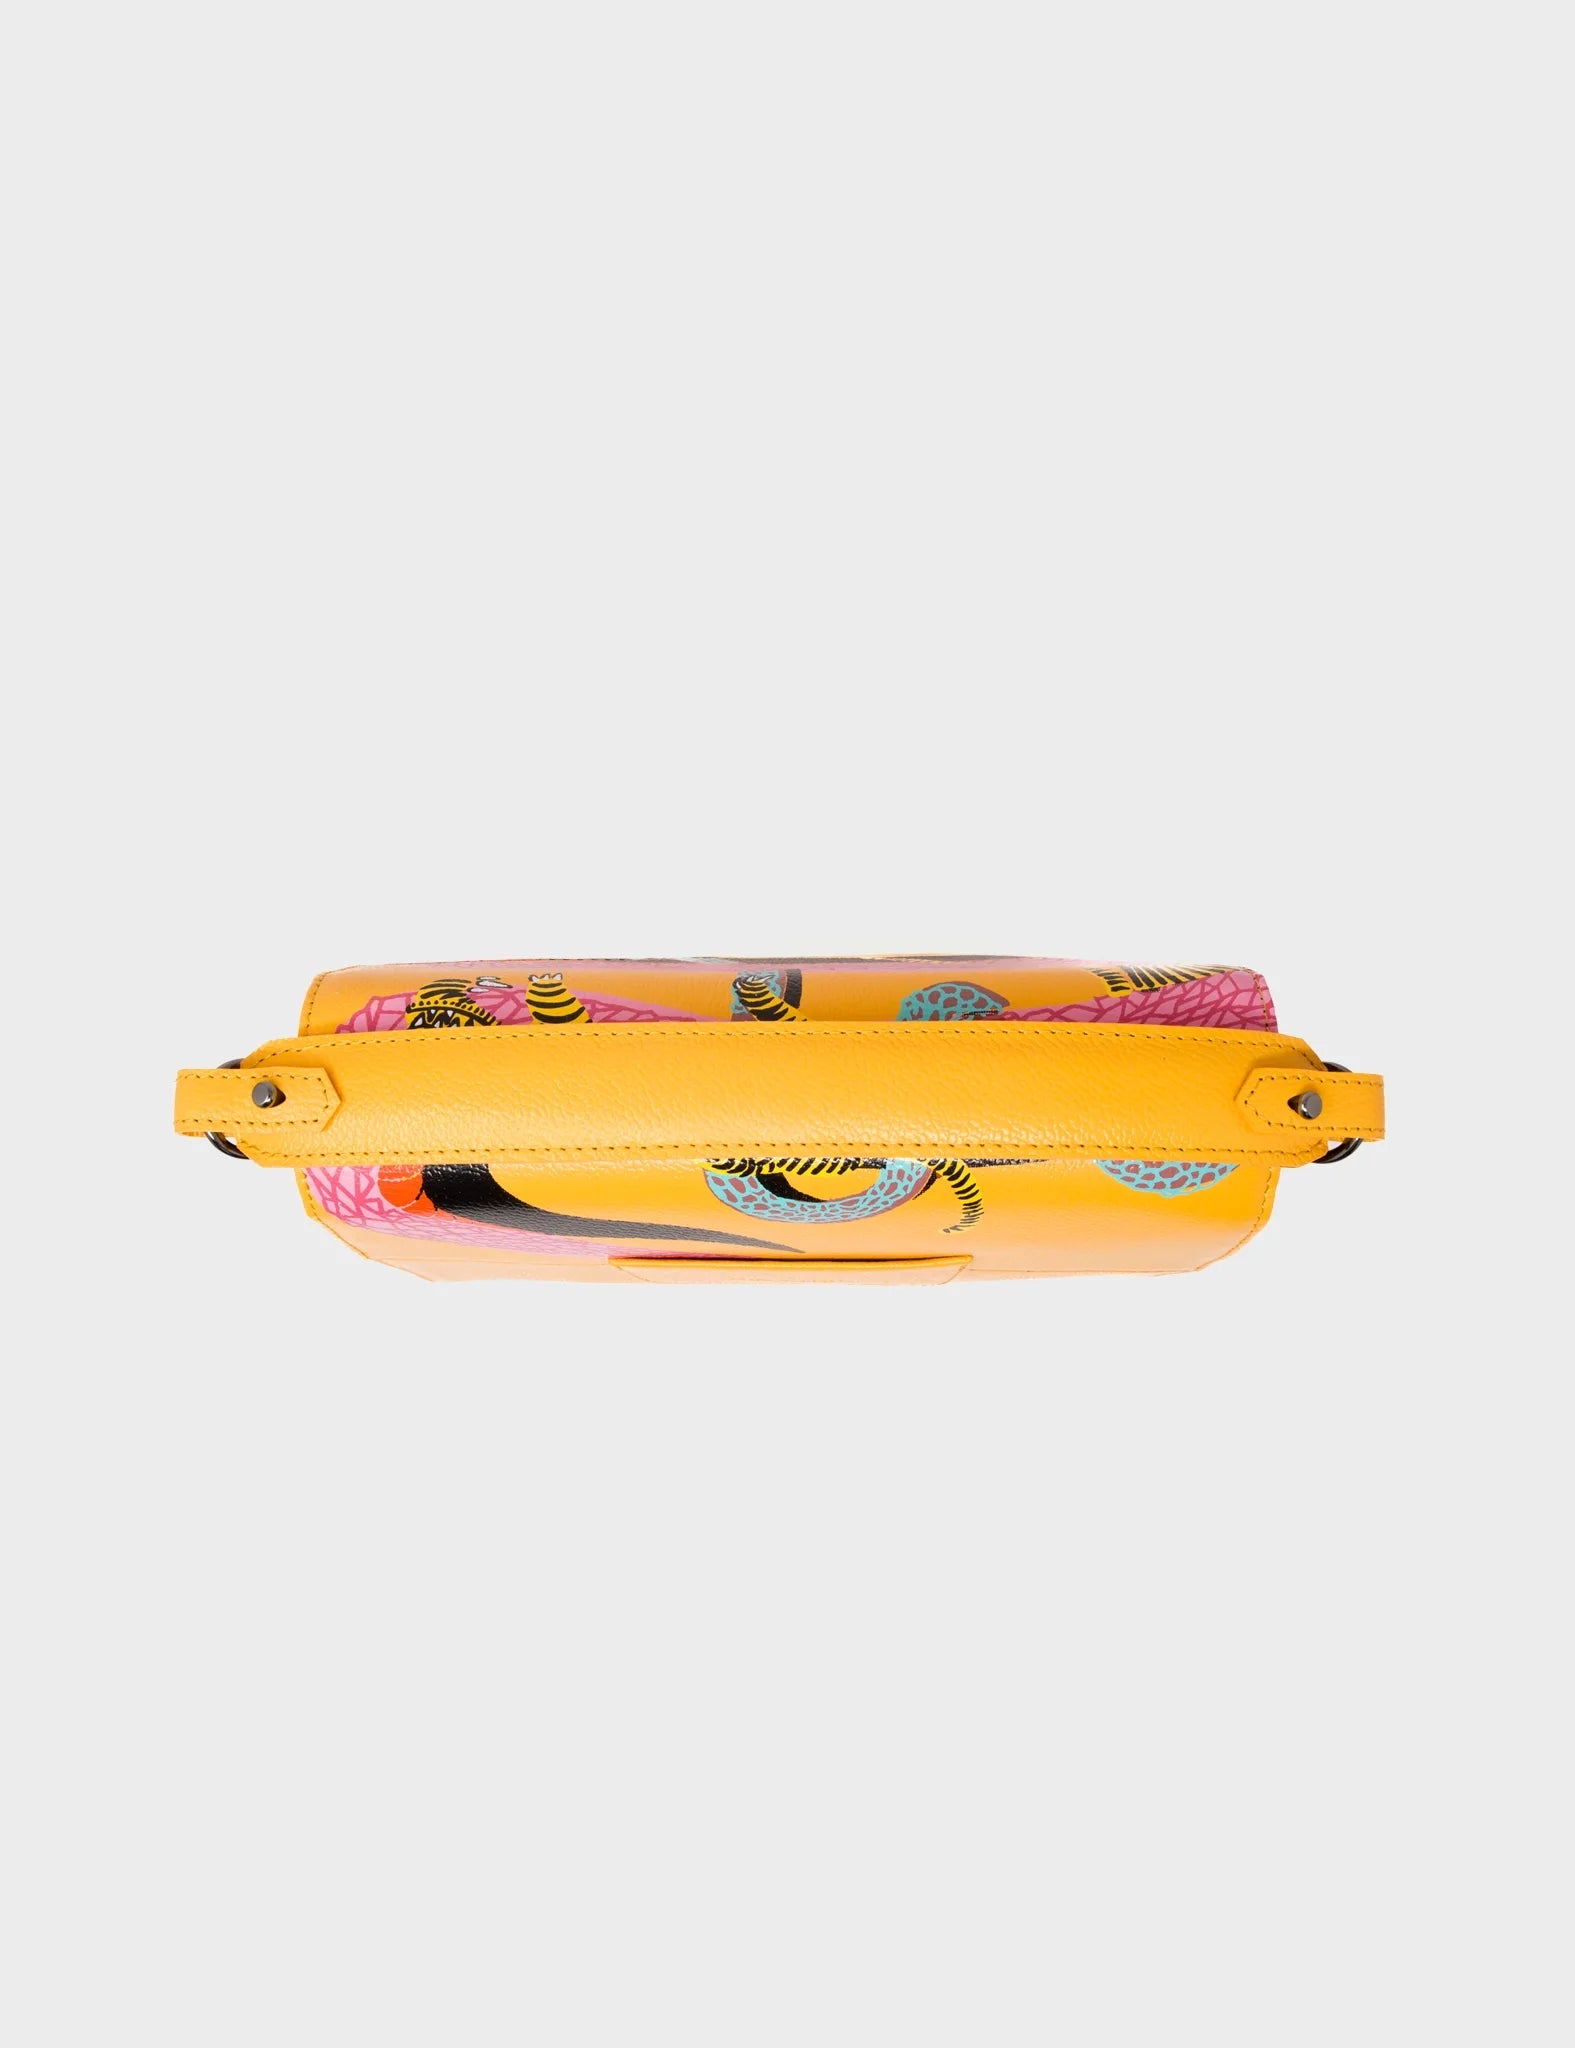 Bag Medium Crossbody Handbag Marigold Leather - Tangle Tiger and Snake Print - Top 